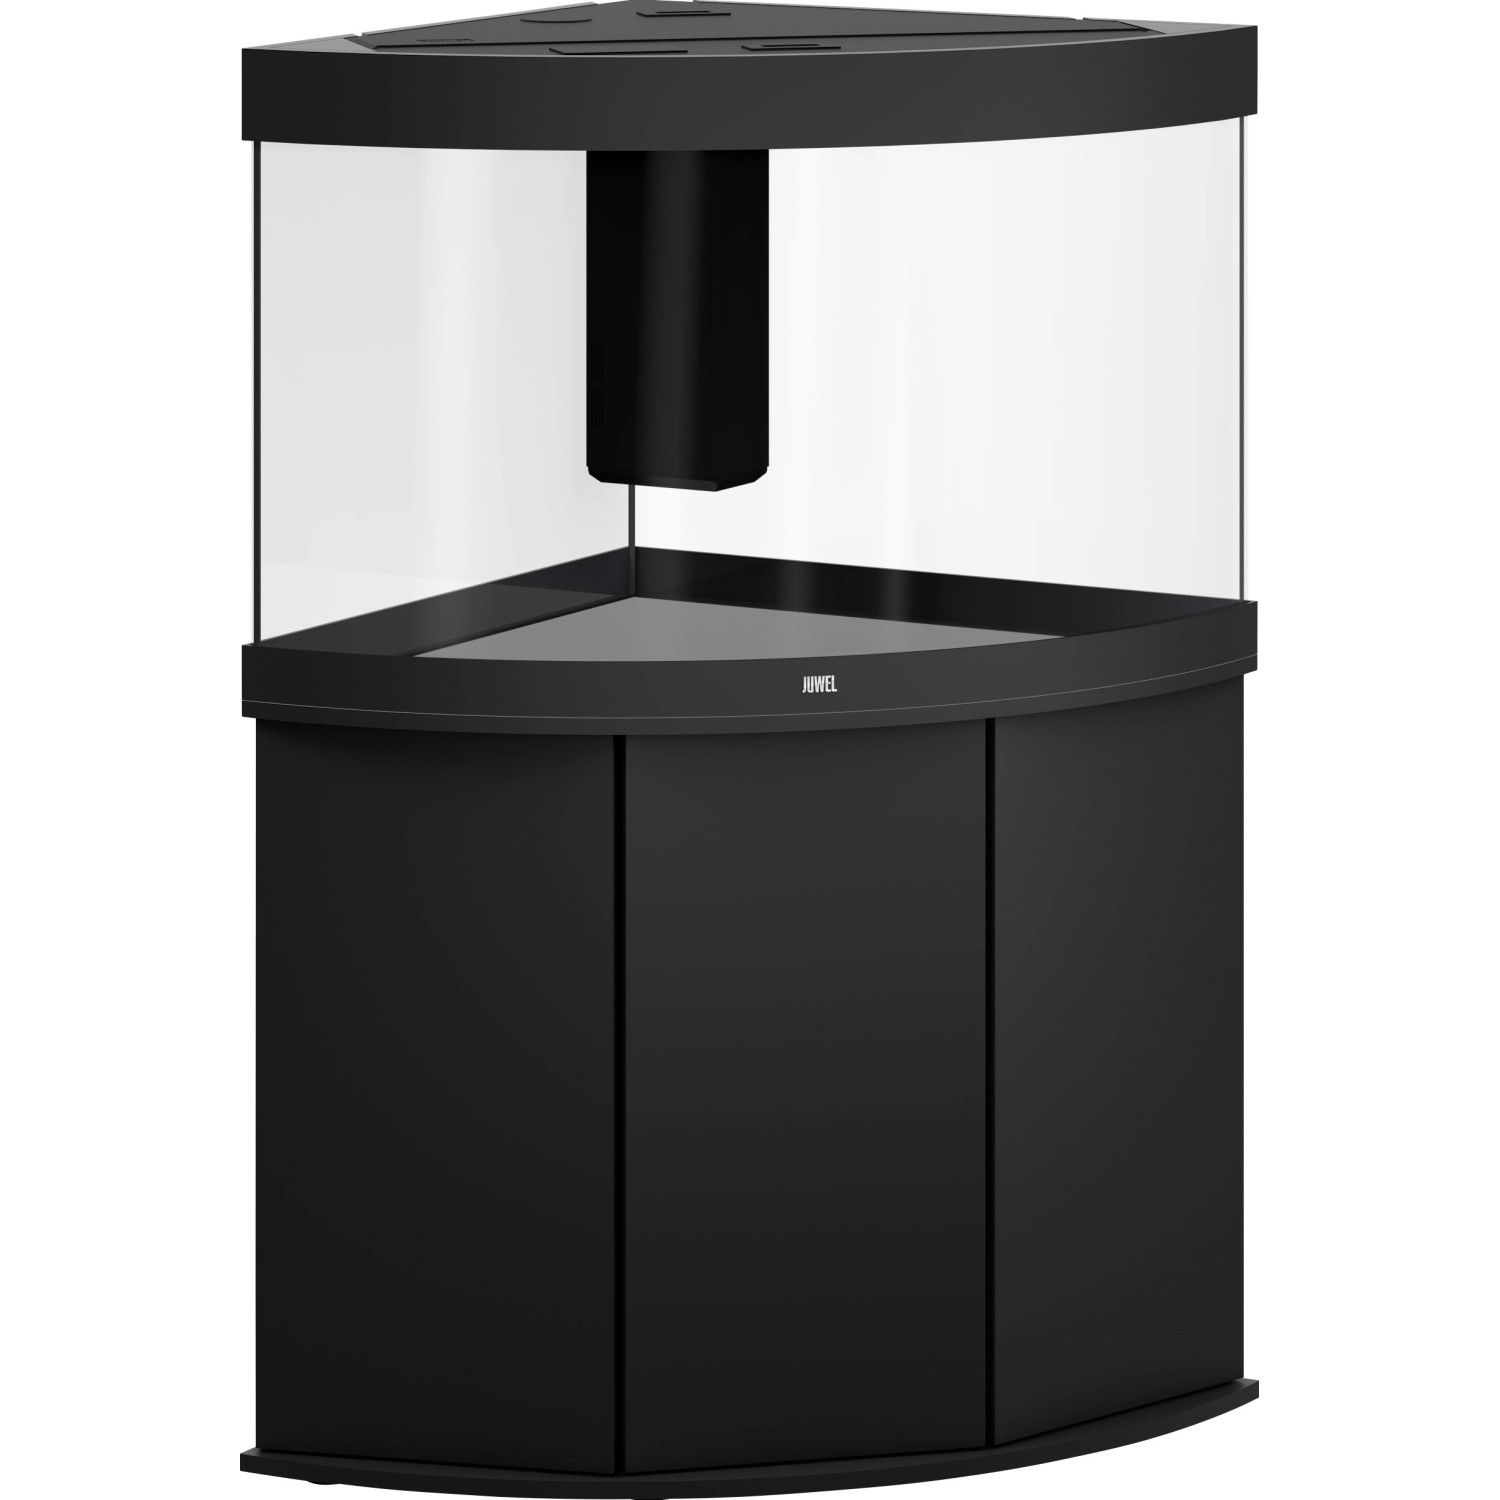 Juwel Aquarium 16351 Trigon 190 LED, mit Unterschrank SBX, schwarz